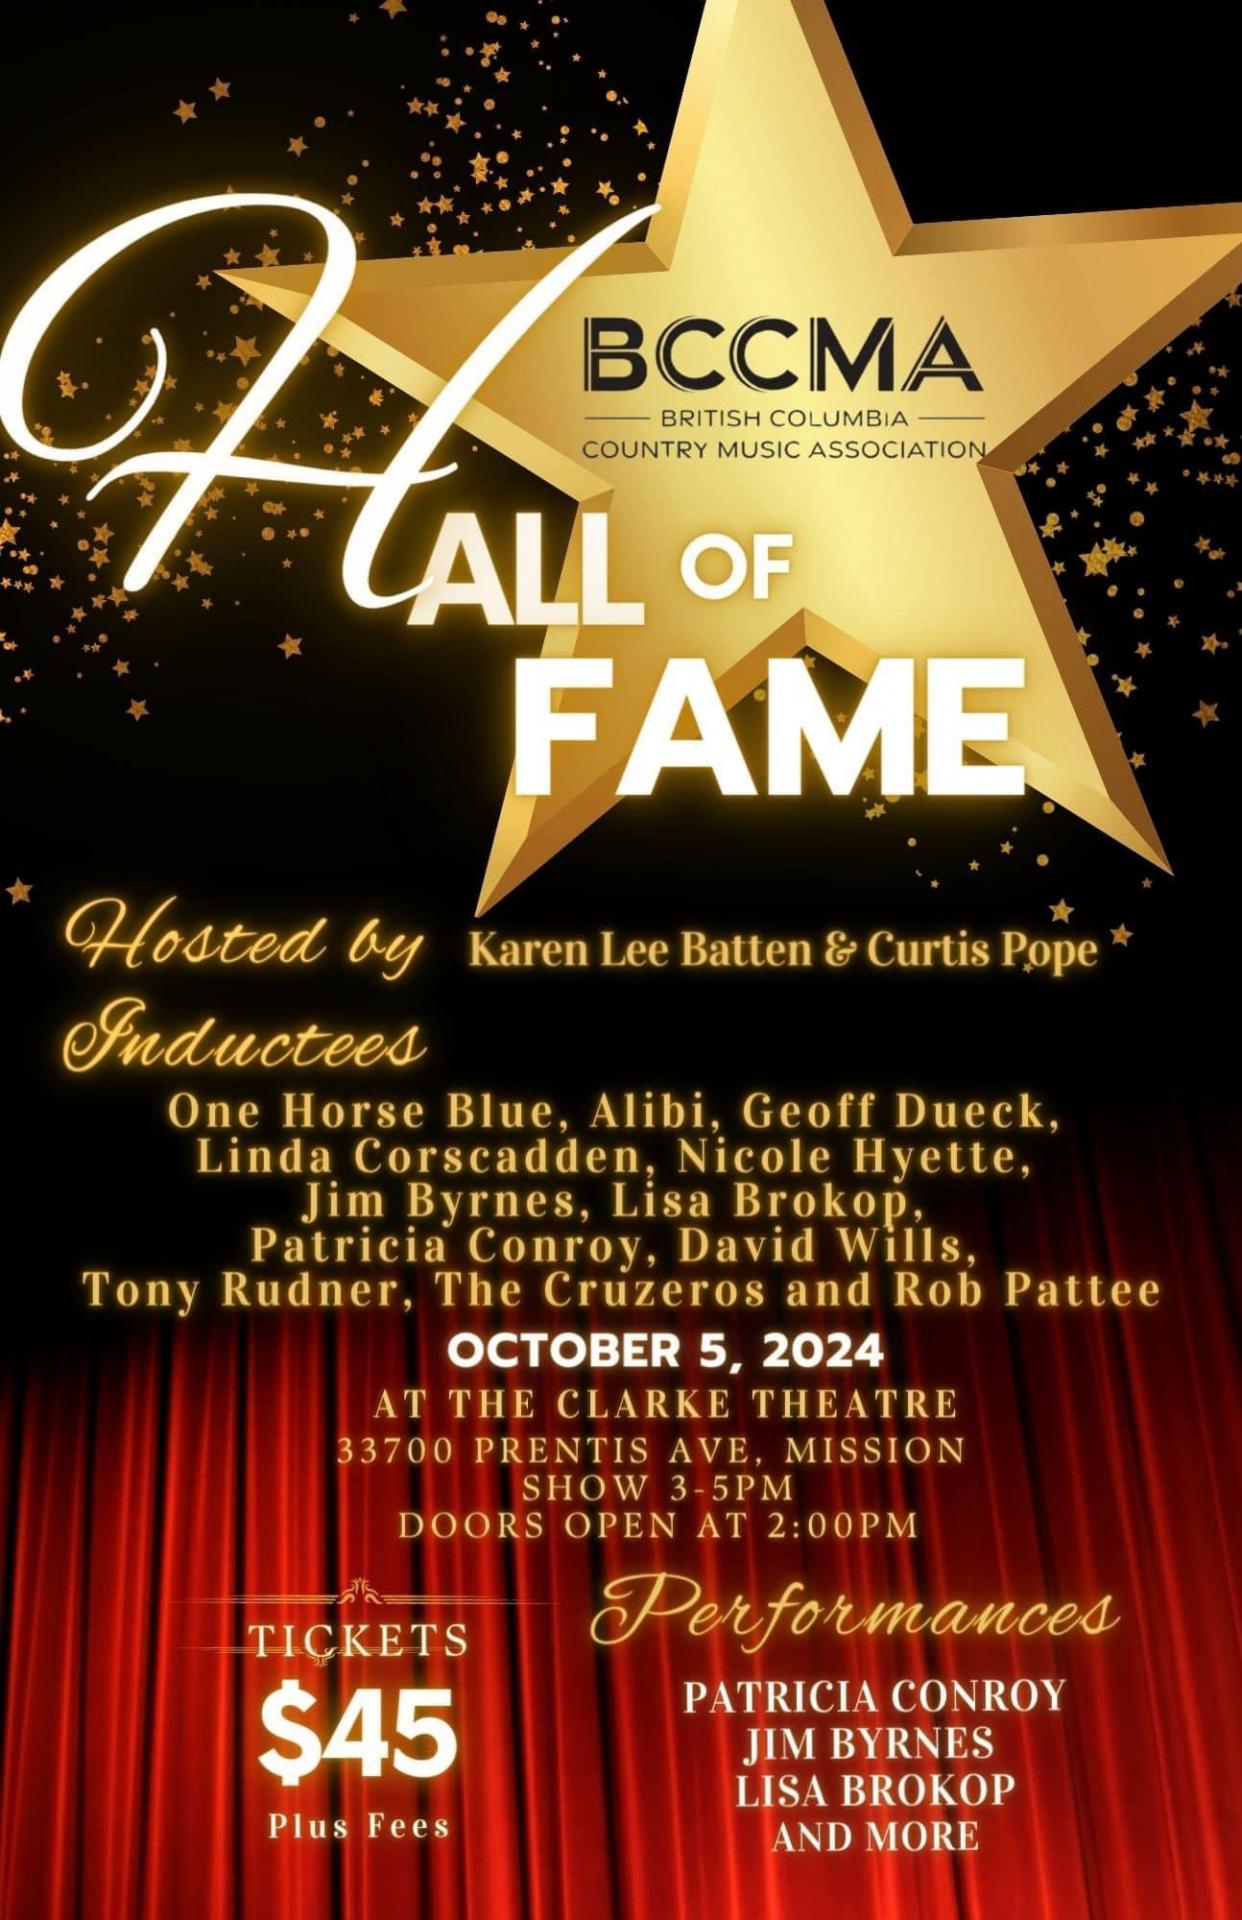 BCCMA Hall of Fame Show